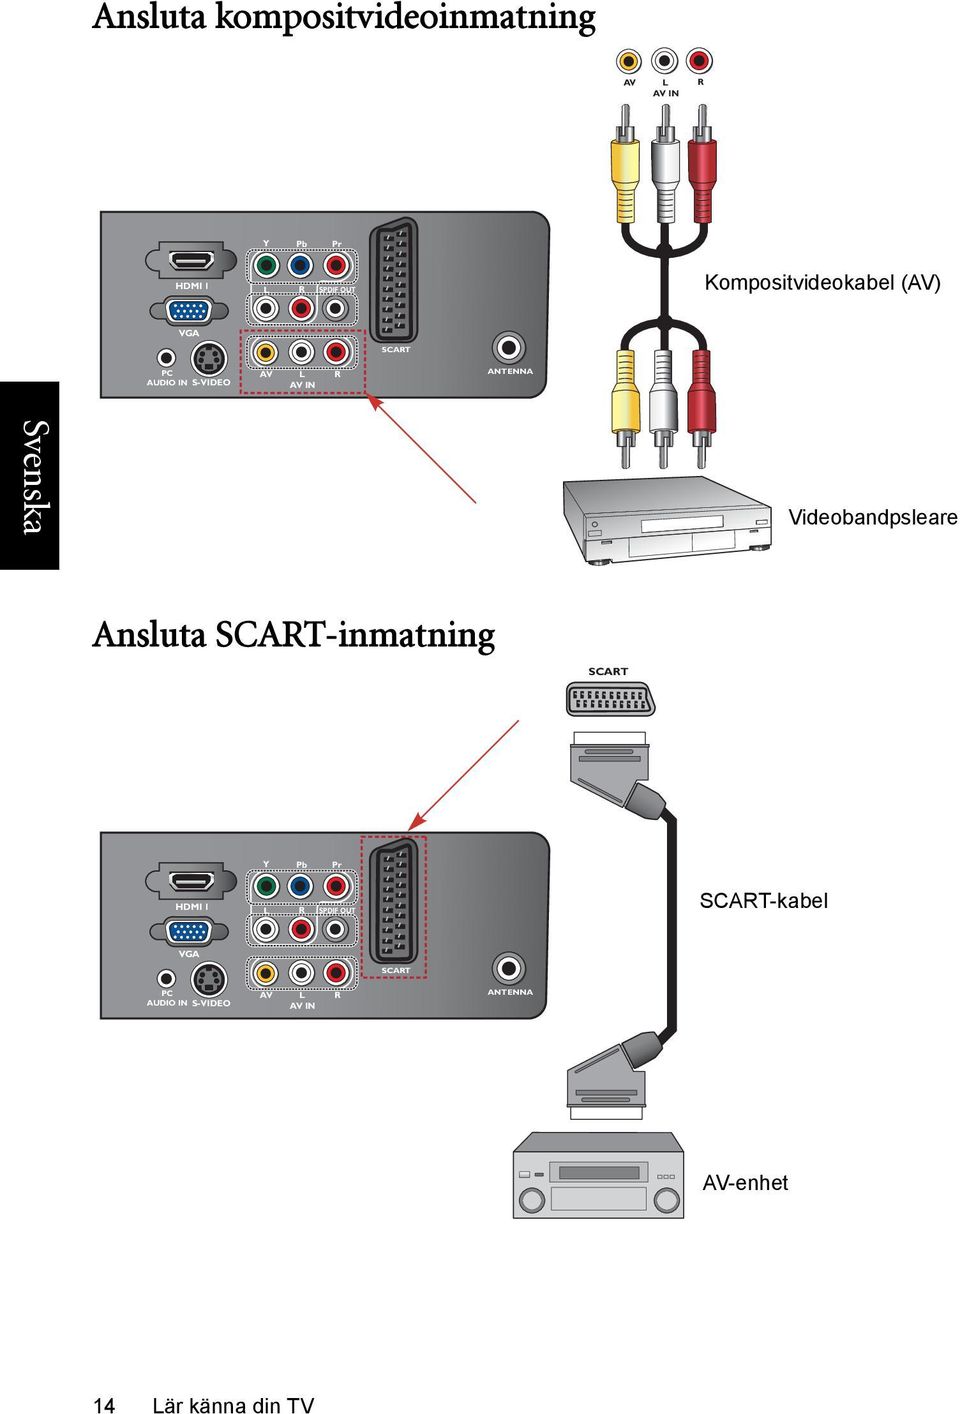 Videobandpsleare Ansluta SCART-inmatning SCART Y Pb Pr HDMI 1 L R SPDIF OUT